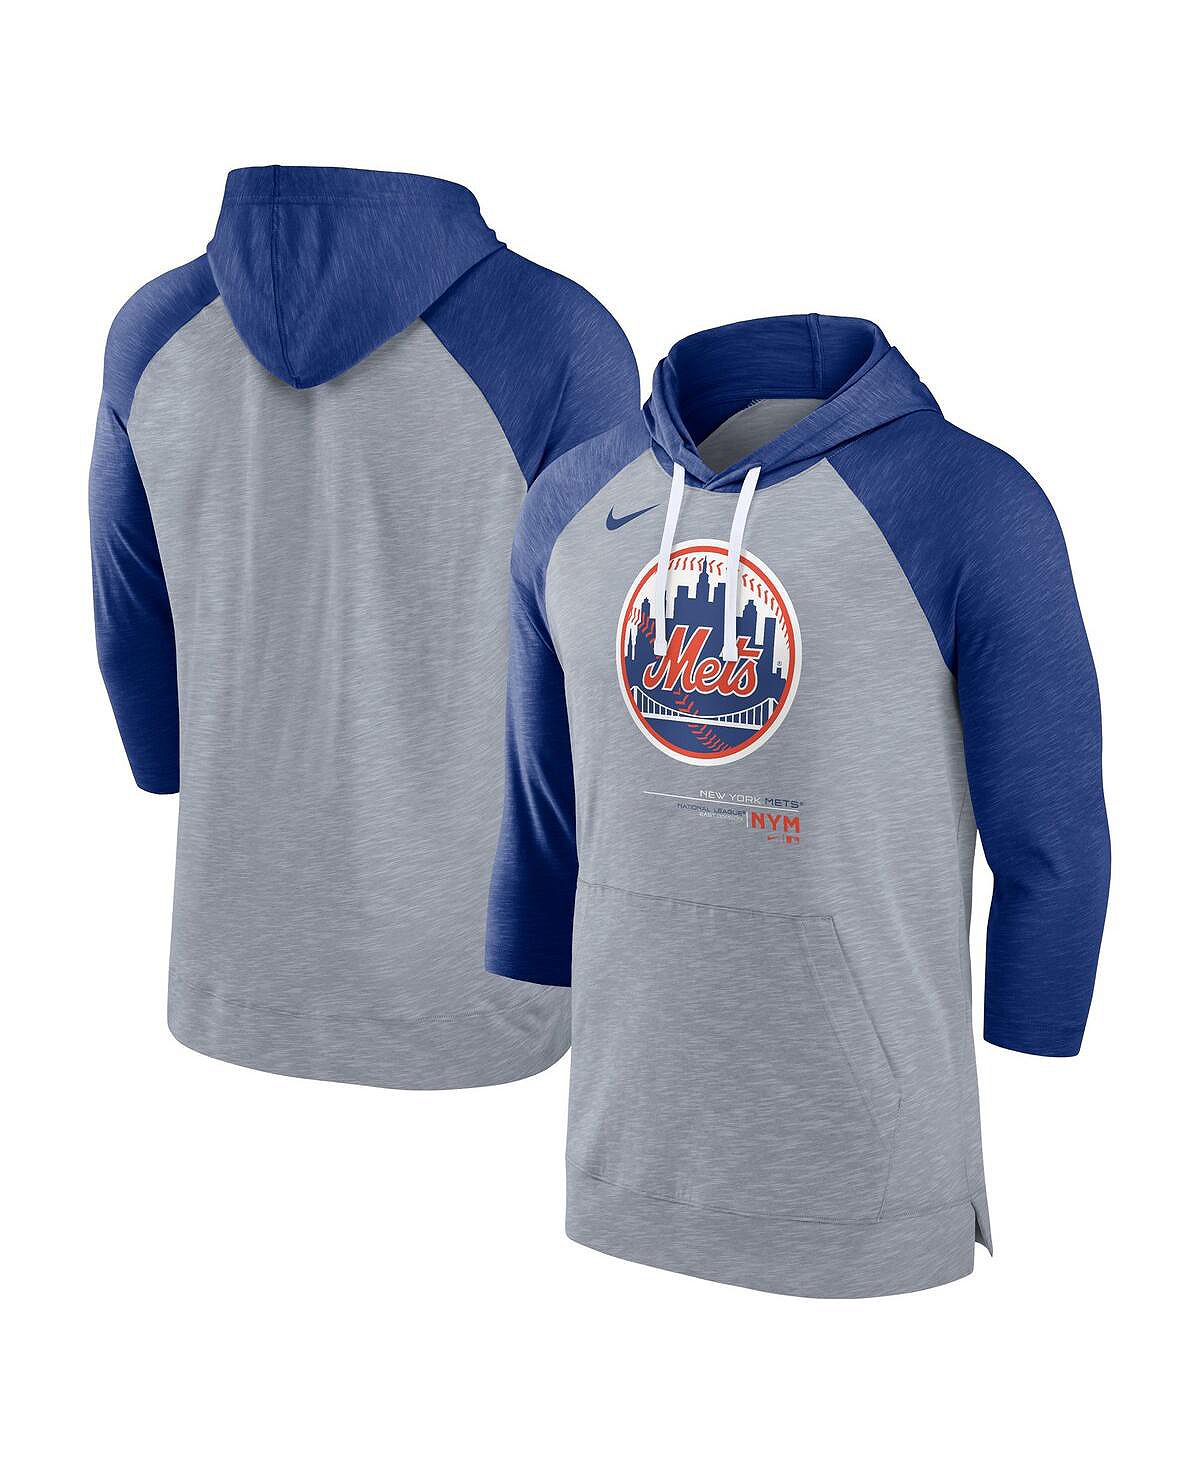 Мужской пуловер с капюшоном Heather Grey, Heather Royal New York Mets Baseball реглан с рукавами 3/4 Nike